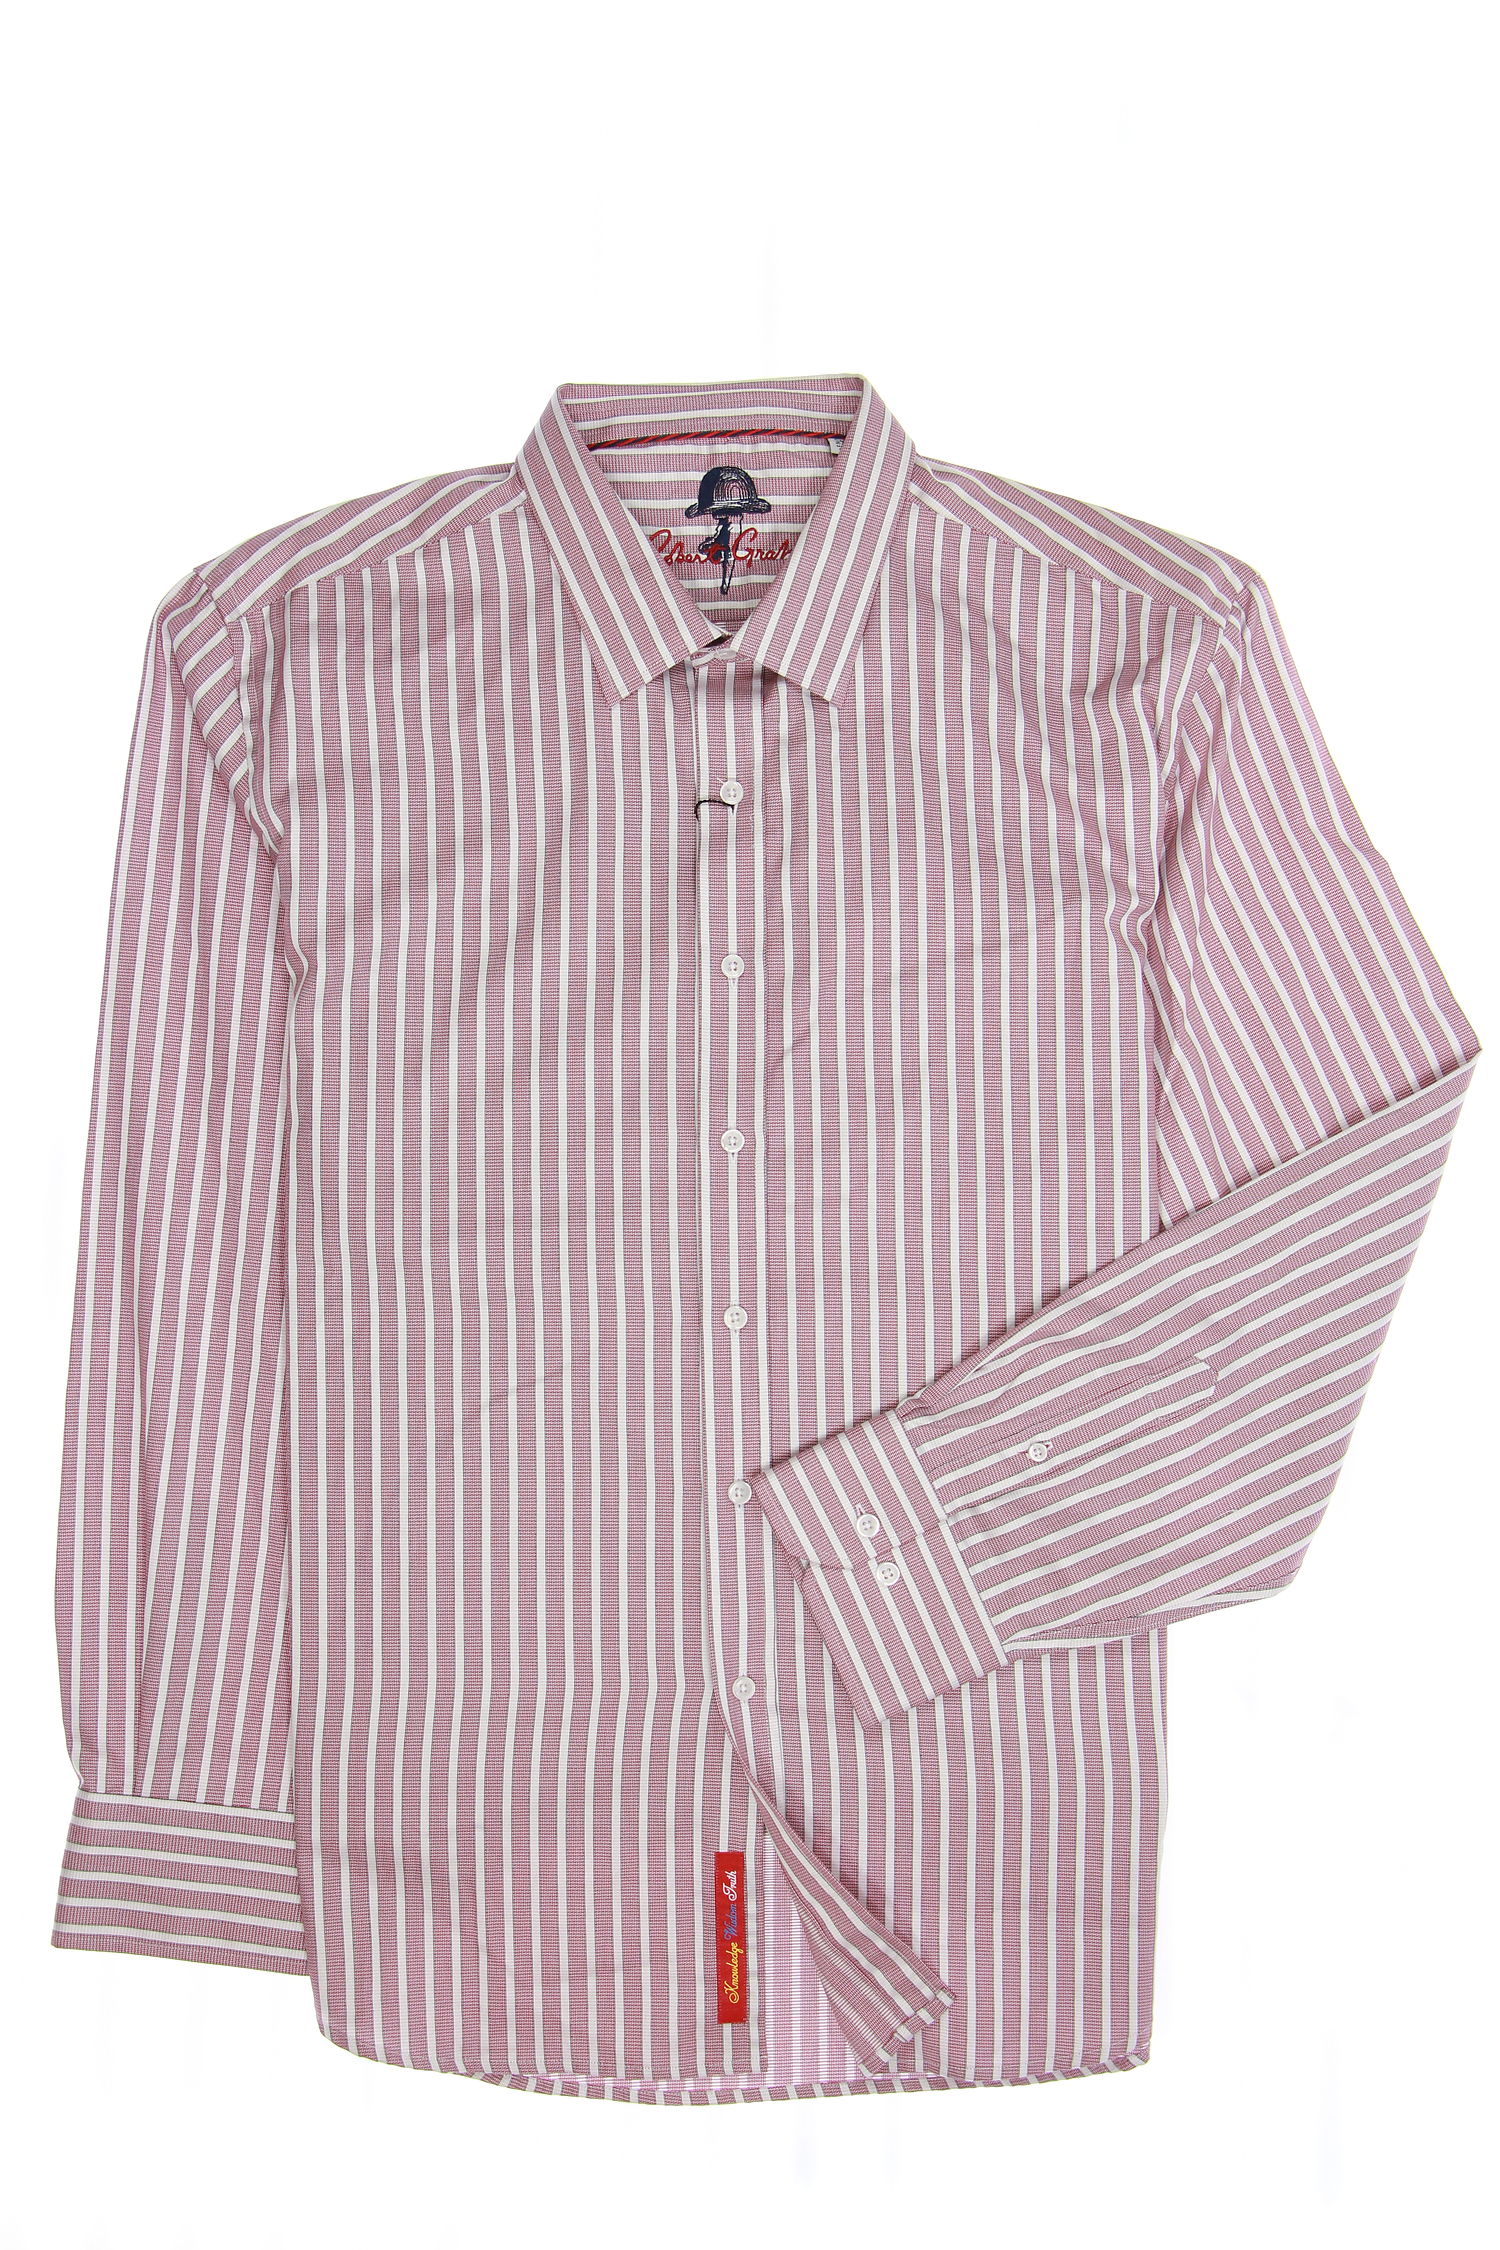 Robert Graham 'Puddle Dock' Mens Burgundy Striped Button Down Shirt